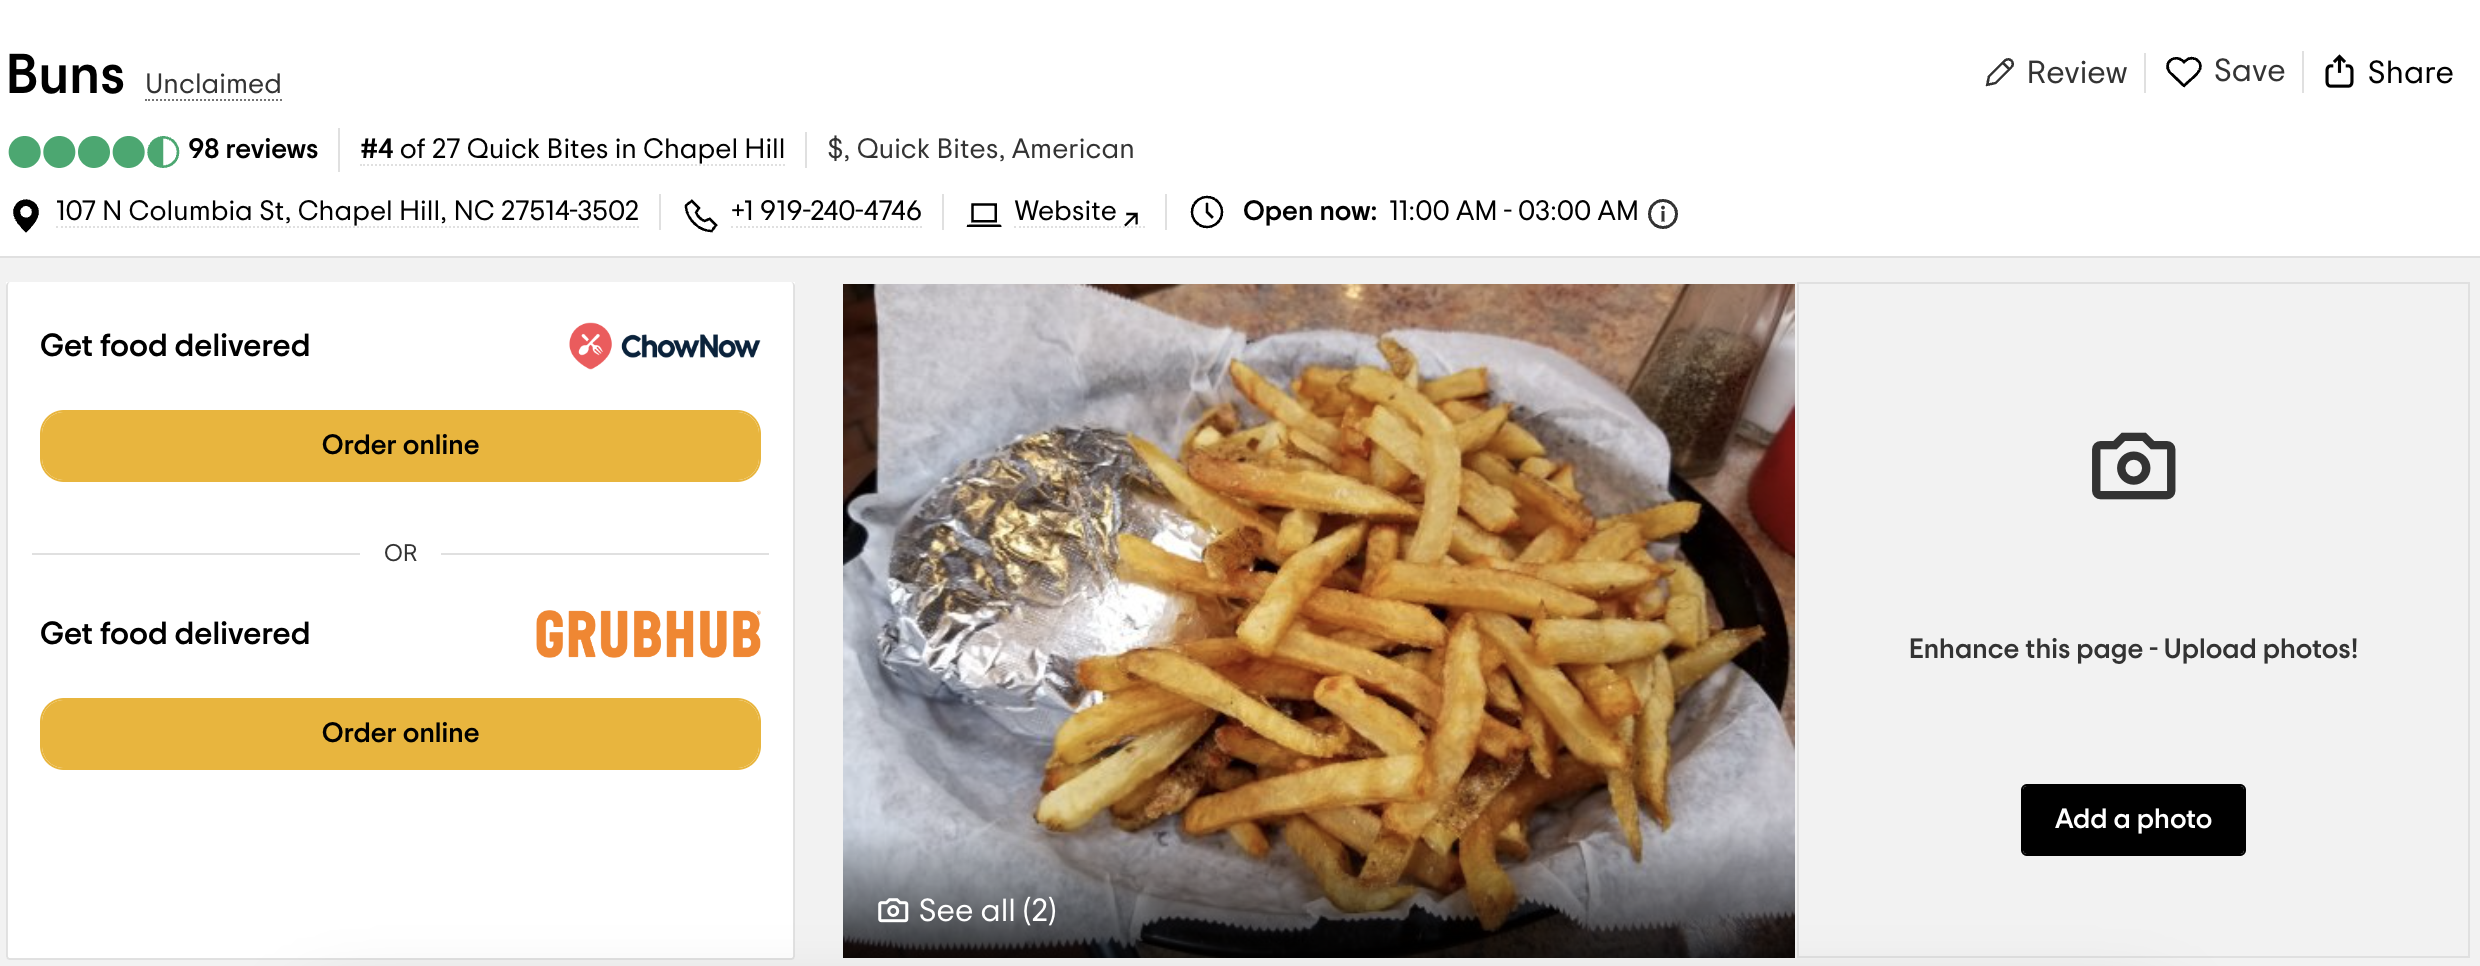 TripAdvisor Restaurant Rating Screenshot